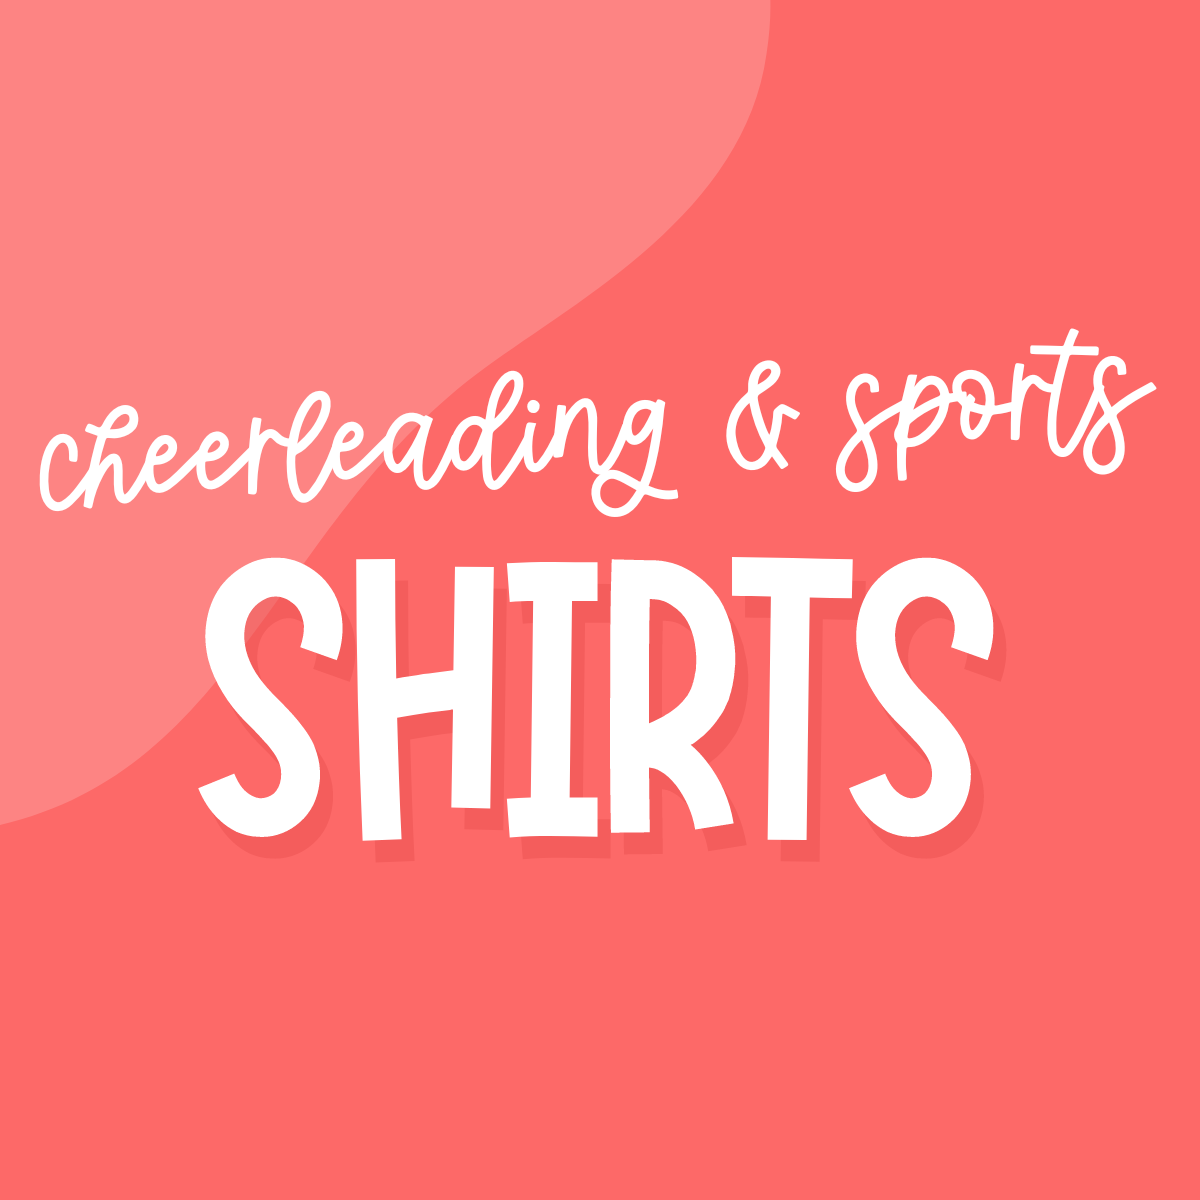 Cheerleading & Sports Shirts